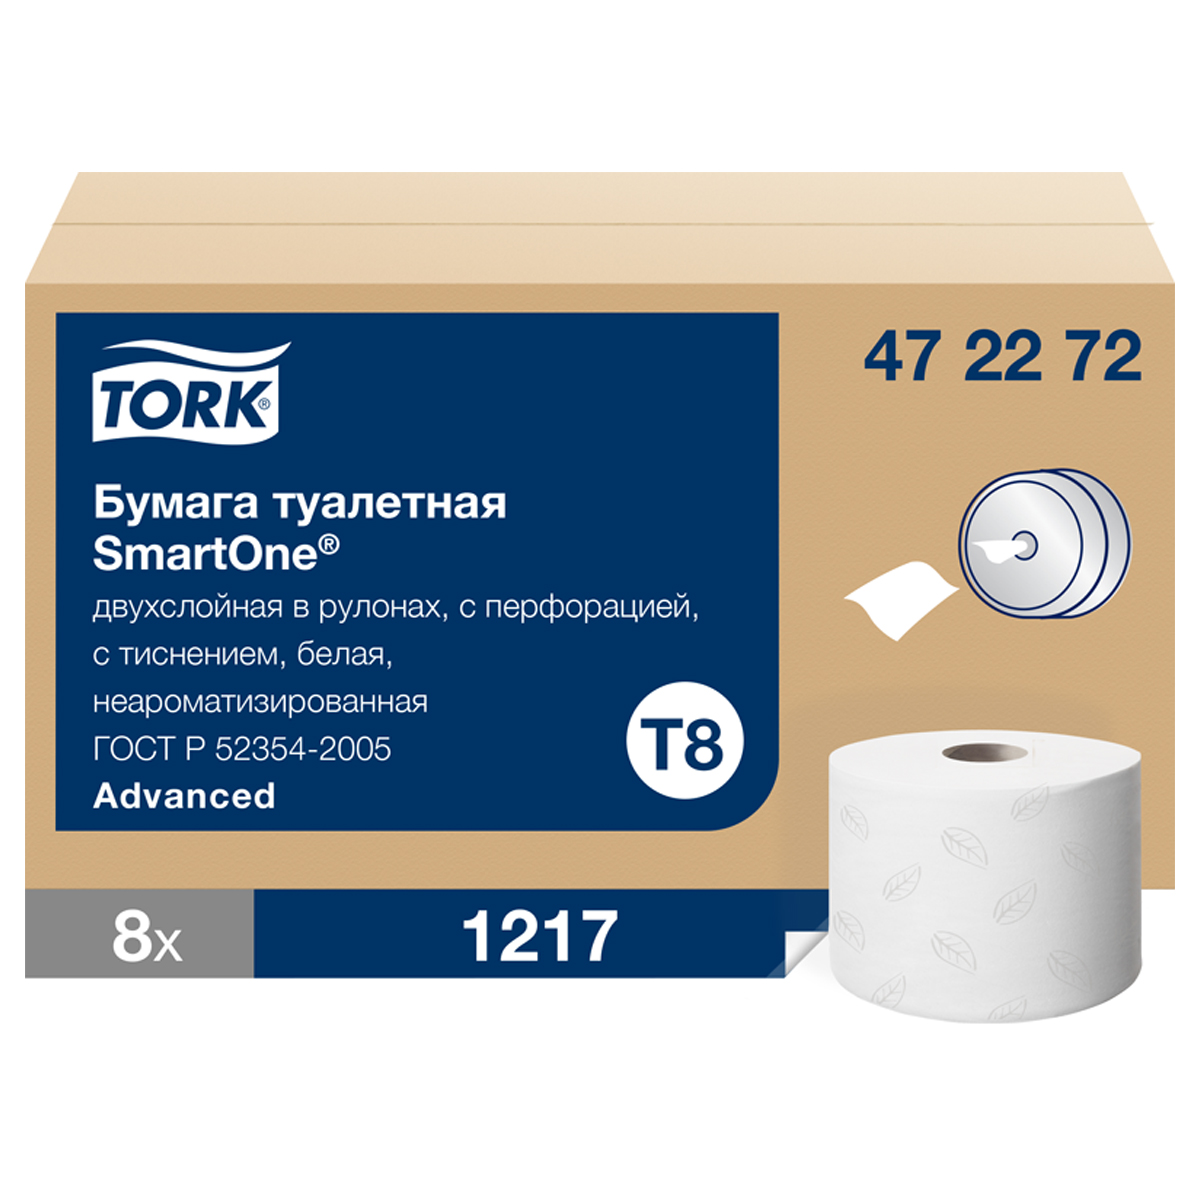 Бумага туалетная Tork SmartOne (T8), 2-слойная, 207м/рул, тиснение, белая, ЦВ